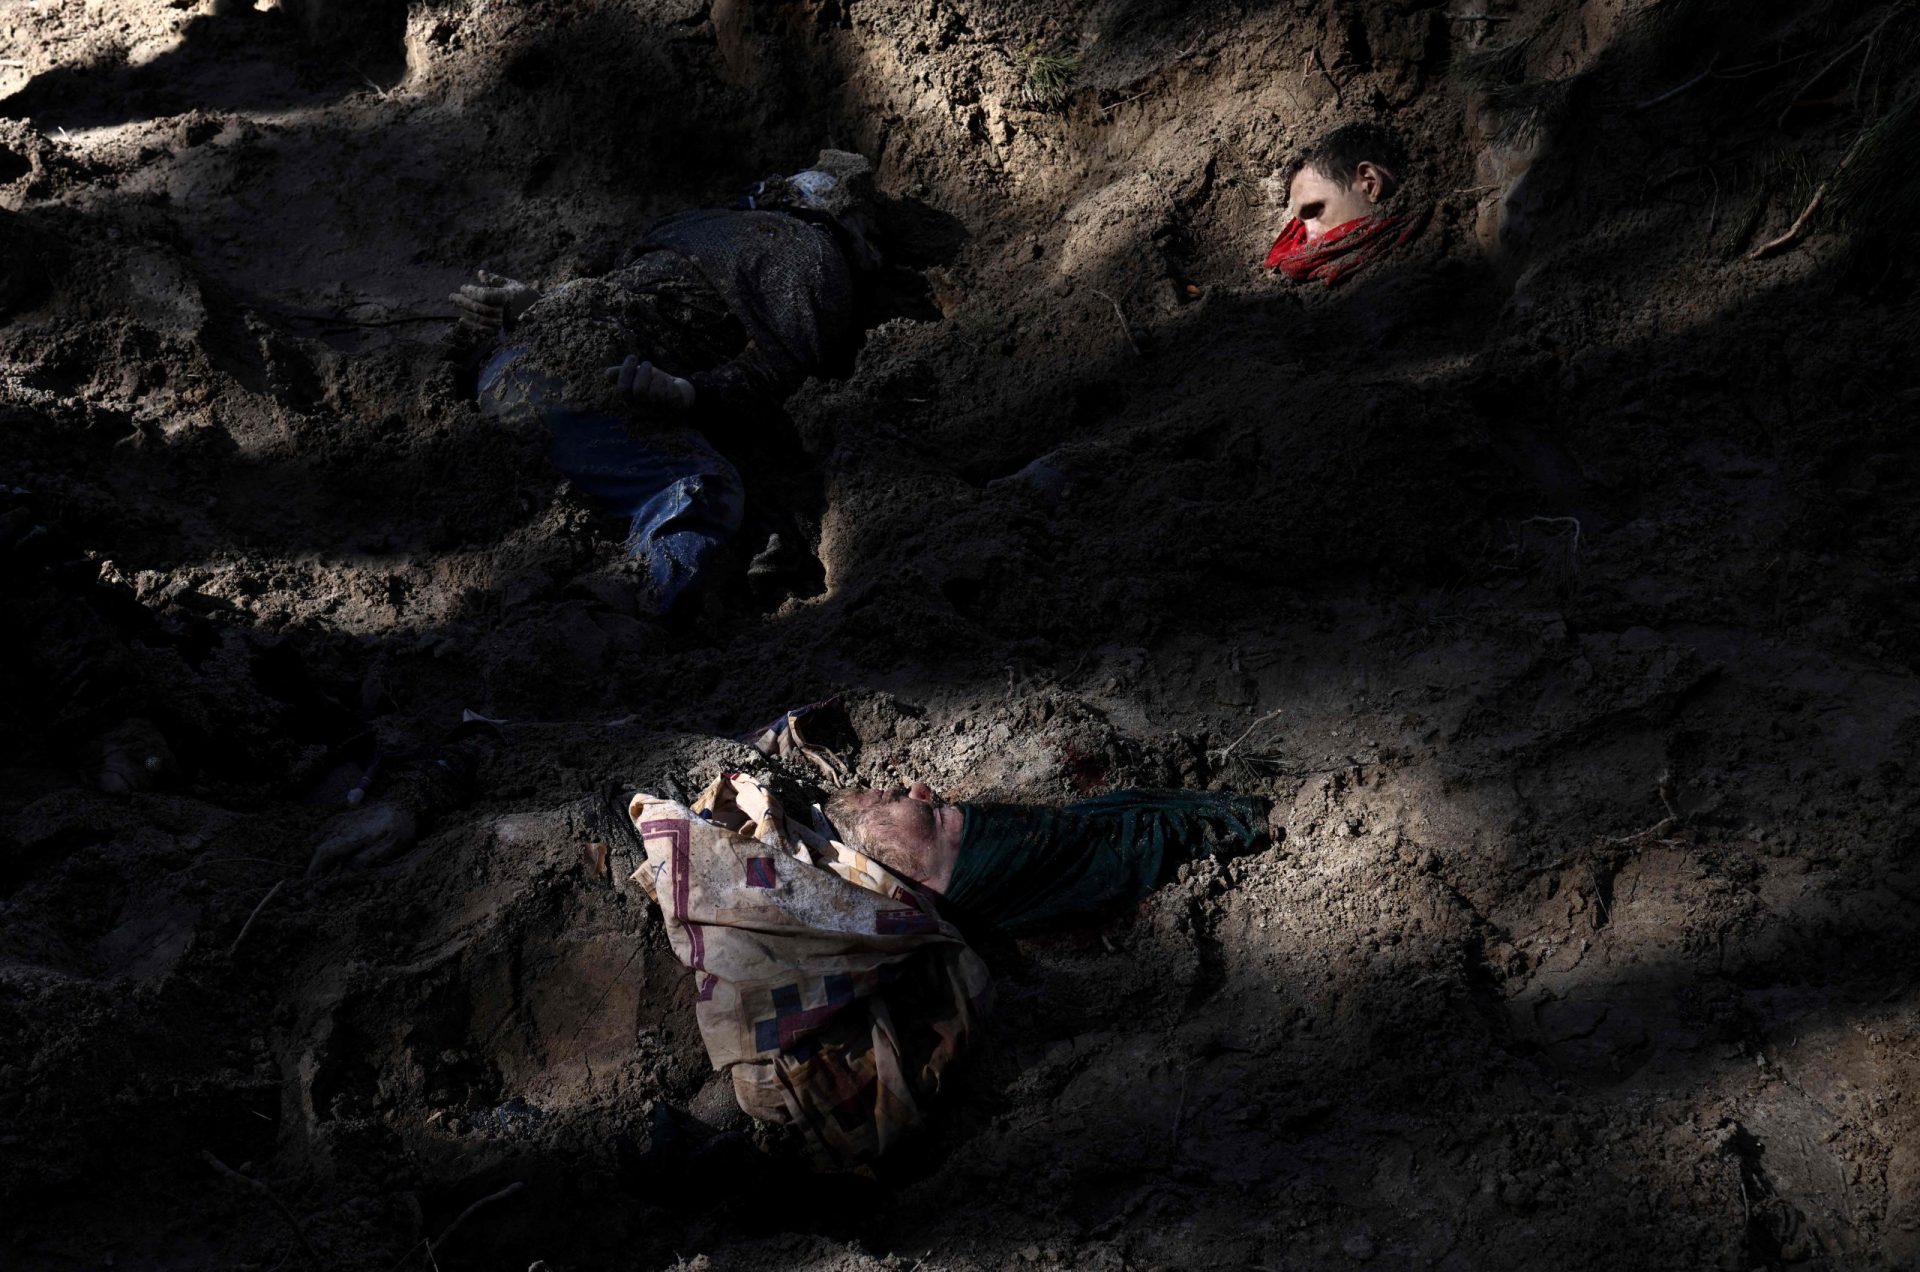 Bucha. Europa prepara novas sanções para punir massacre